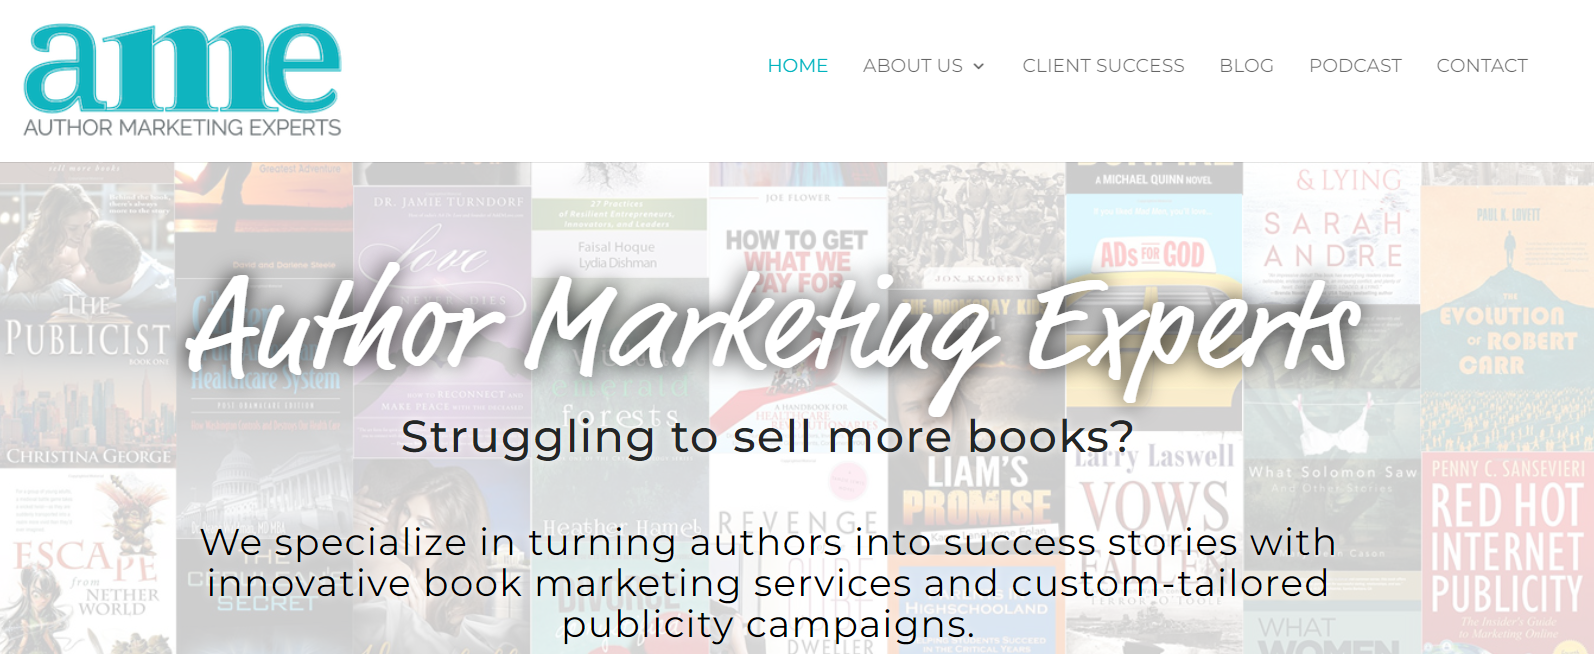 Author Marketing Experts book marketing company homepage